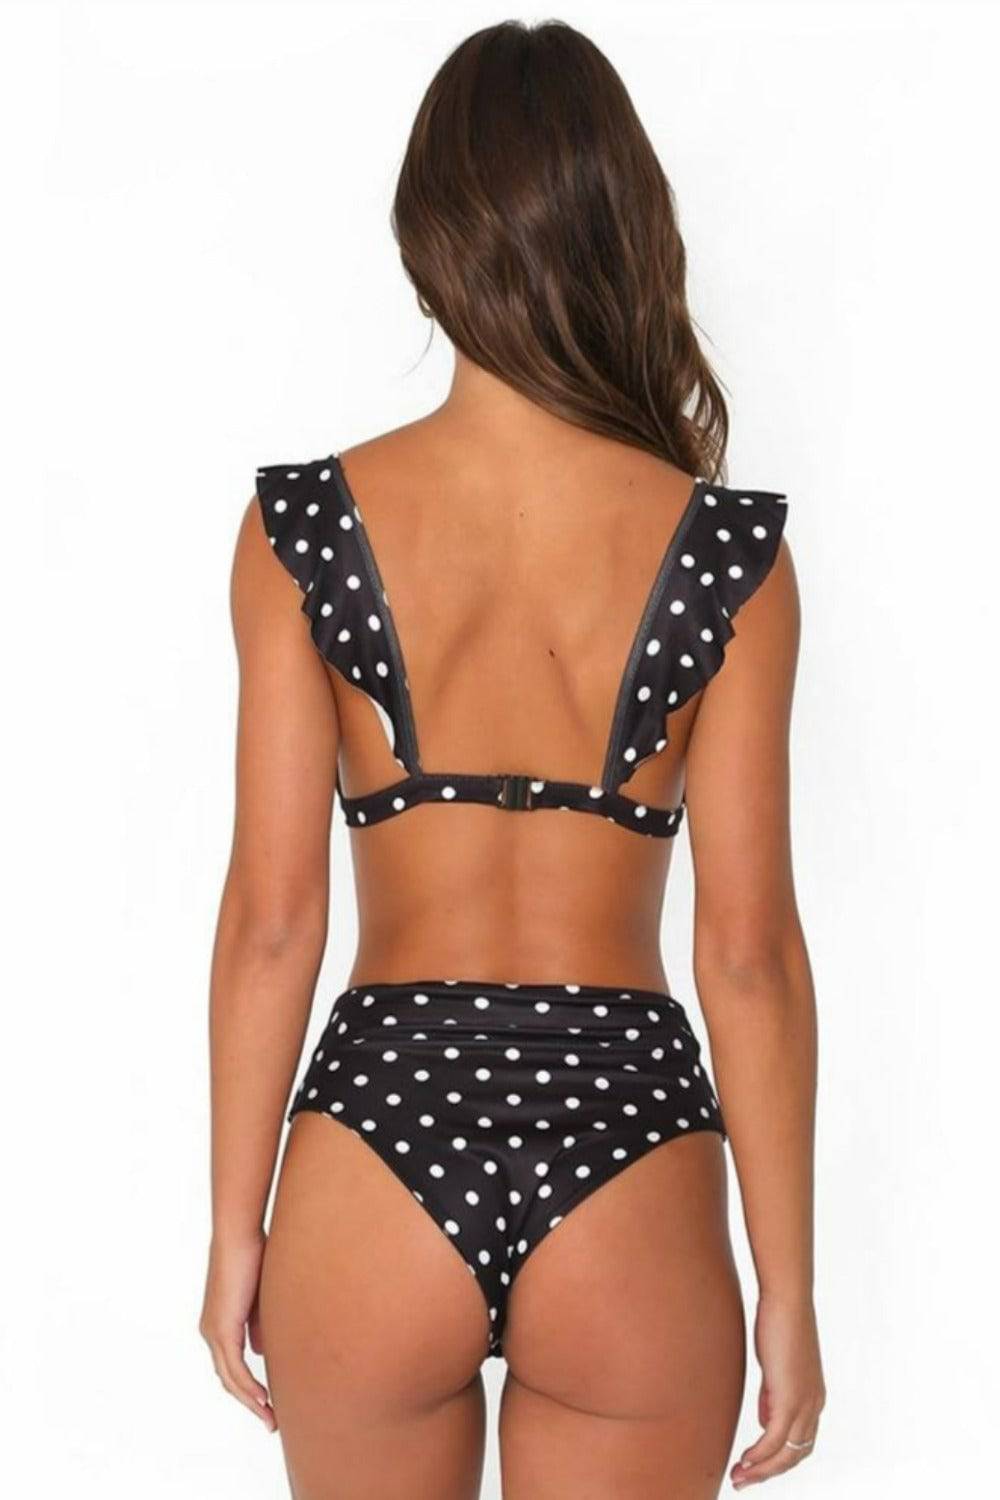 Rachel Polka Dot Ruffle Black High Waisted Bikini - TGC Boutique - Polka Dot Swimsuit